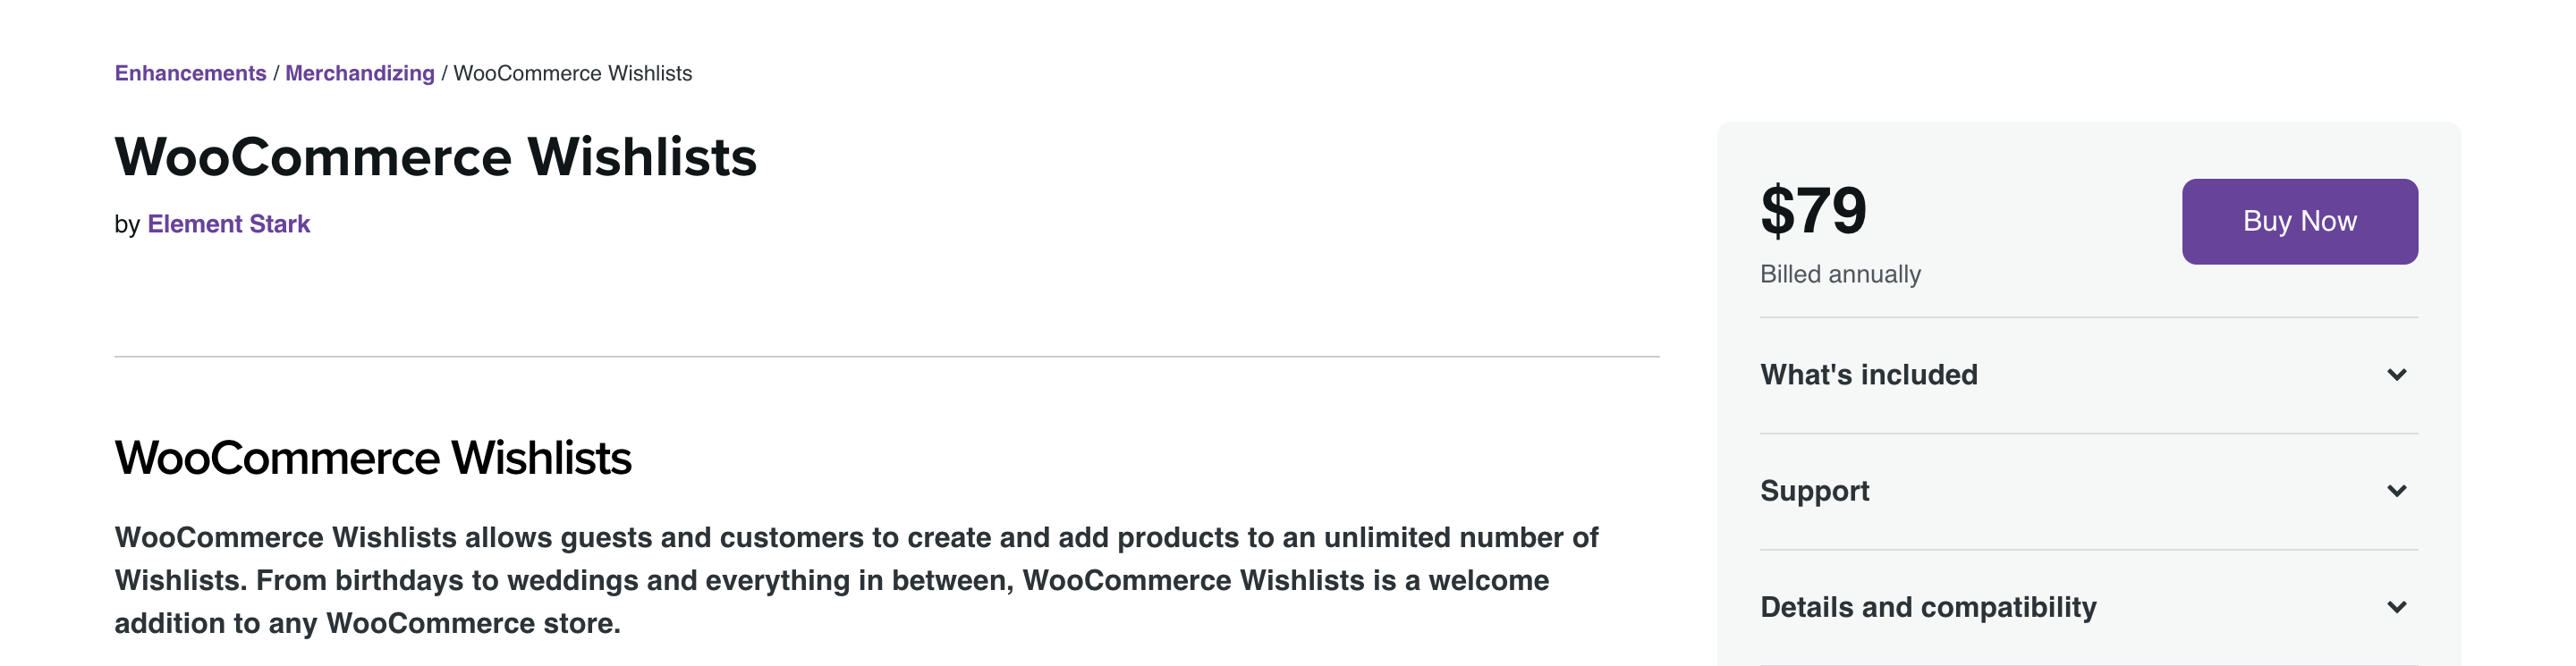 WooCommerce Wishlists